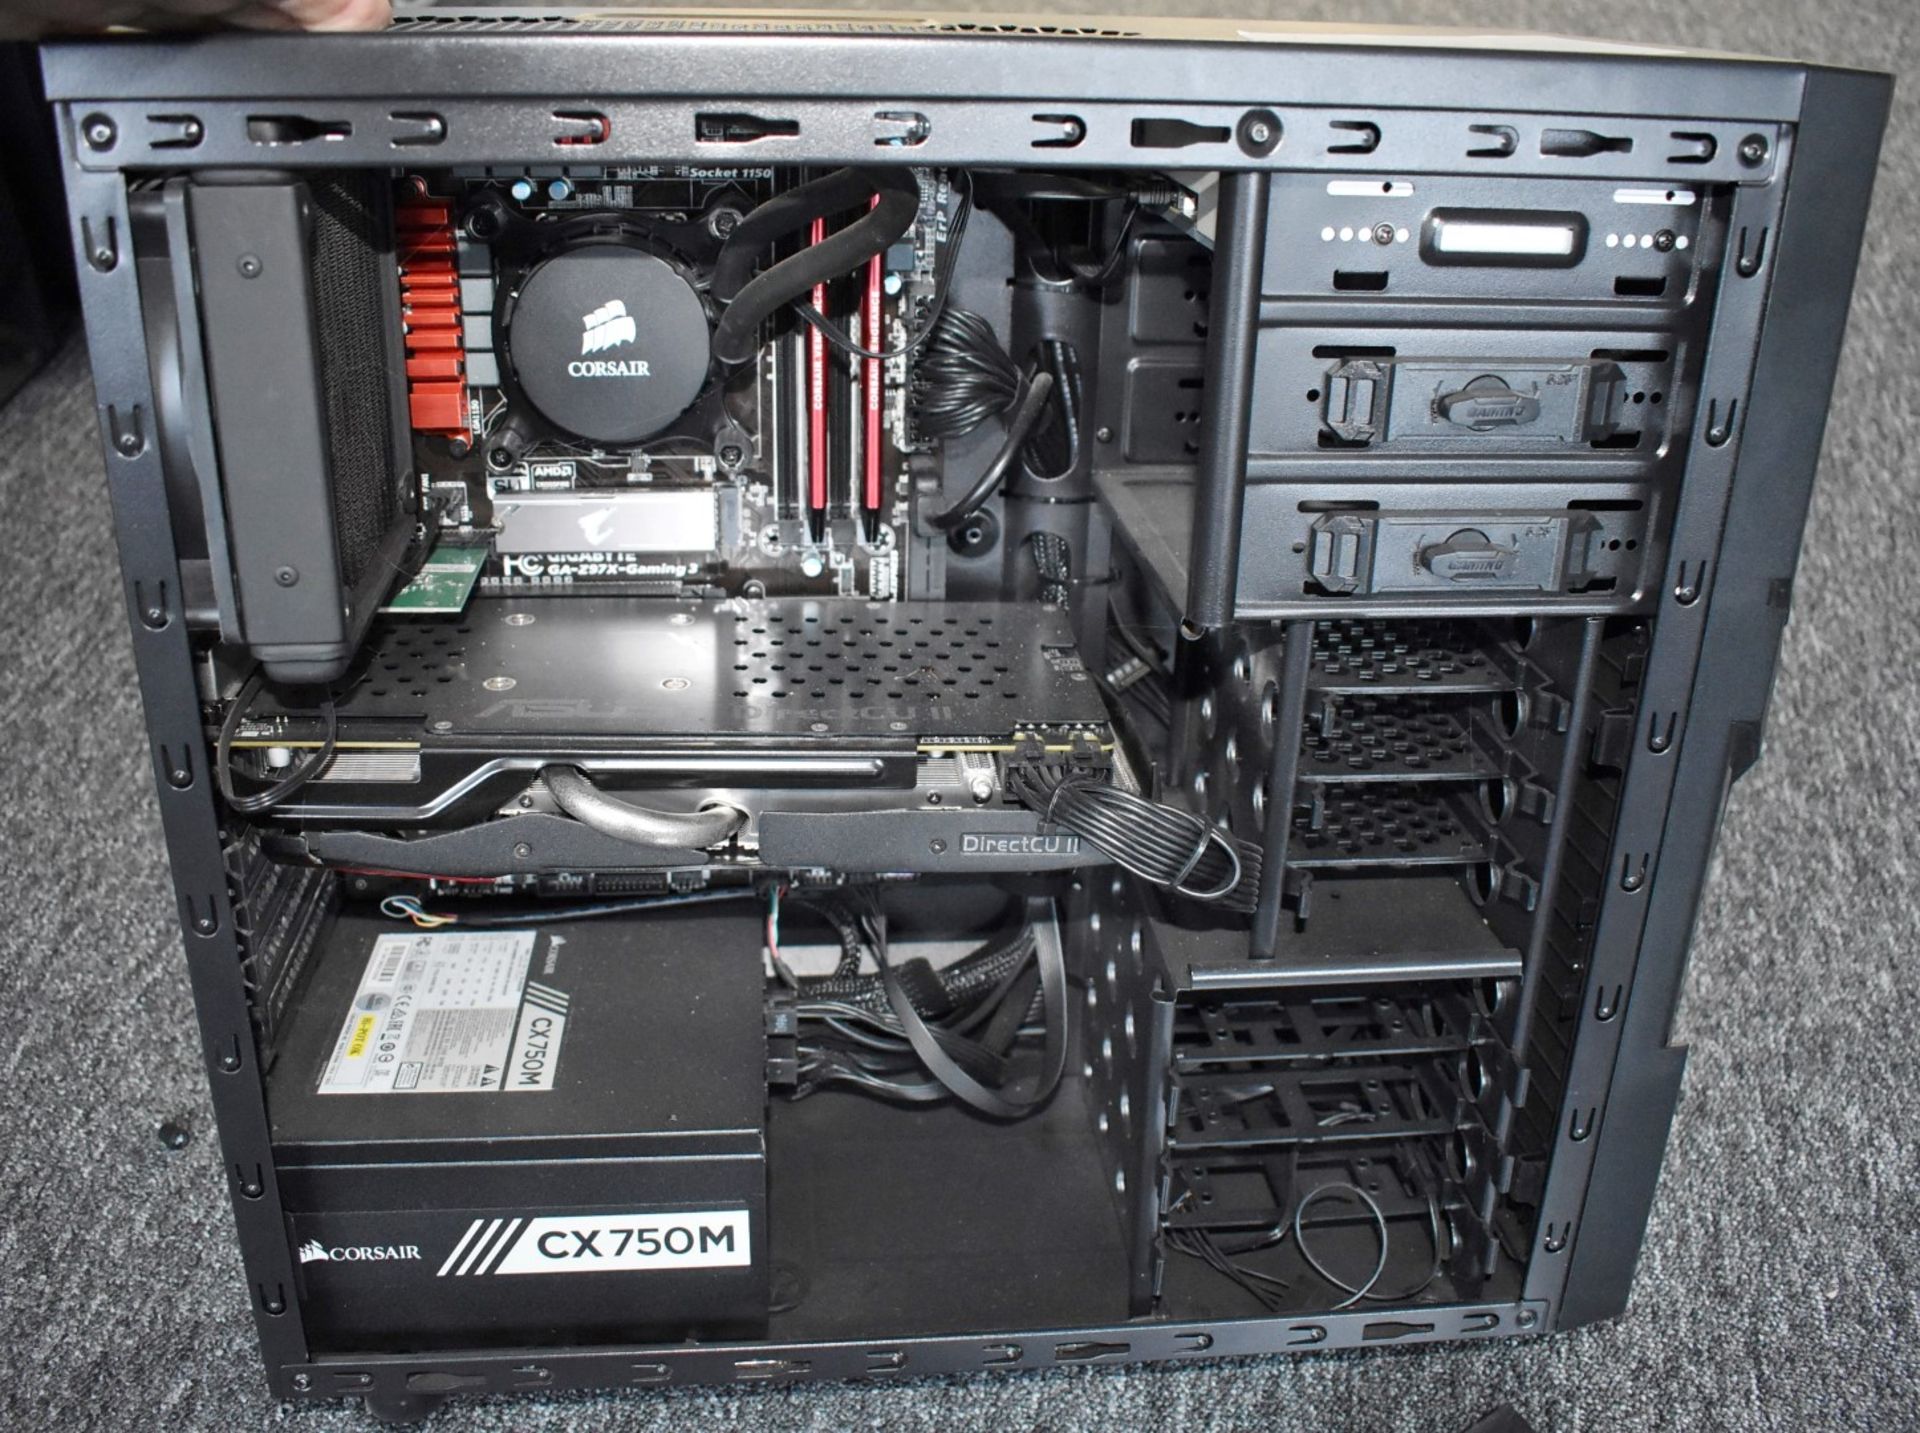 1 x Desktop Computer Featuring an Intel i7-4770K Processor, 16GB Ram, 256GB NVME Drive, Corsair - Image 4 of 8